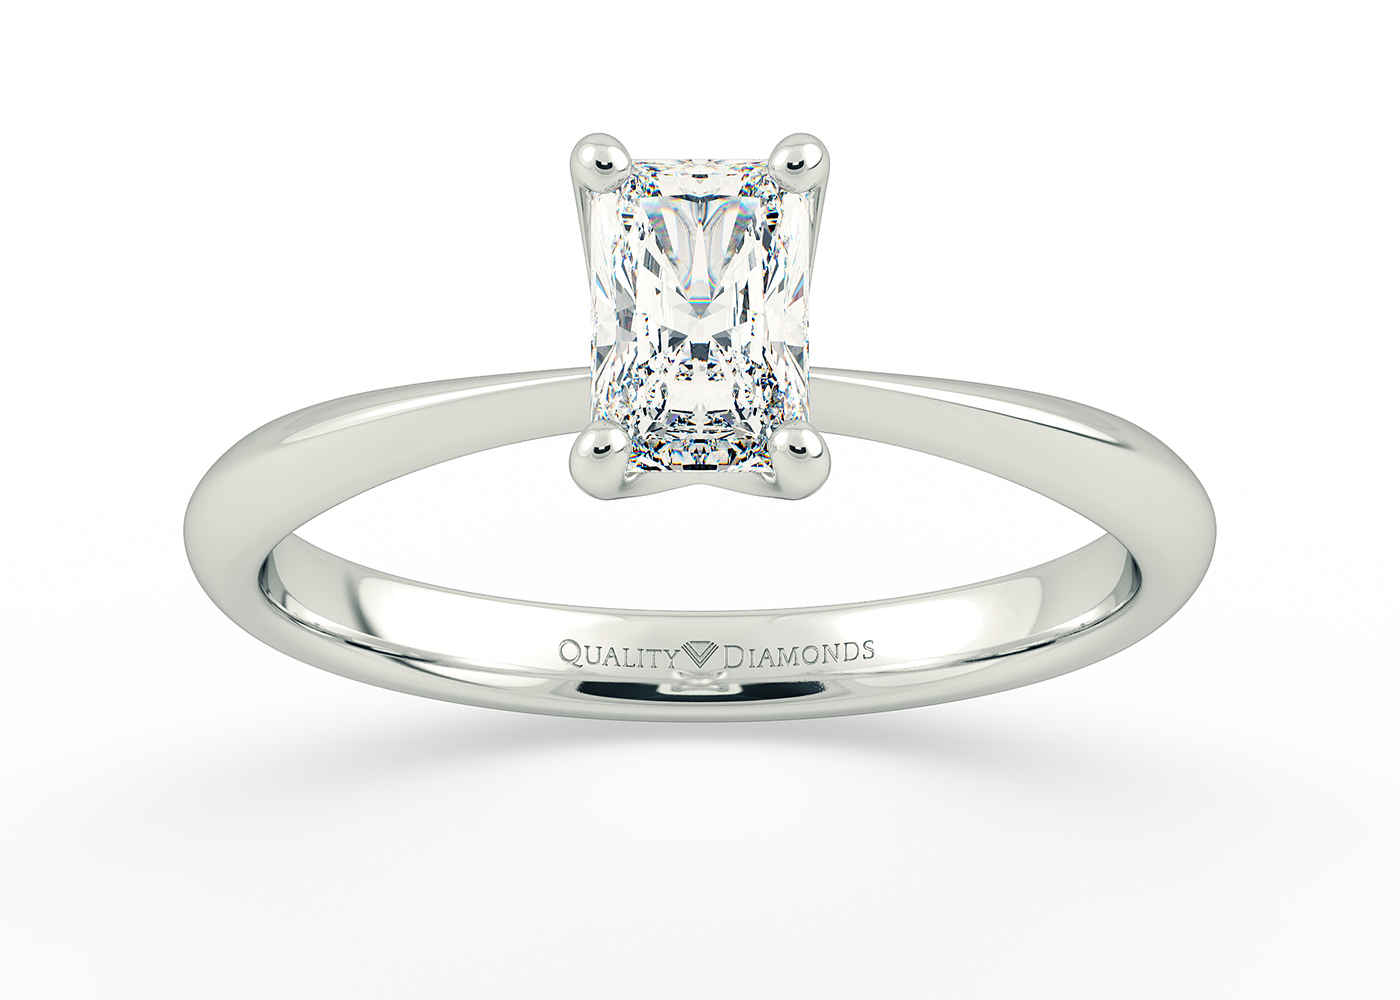 Two Carat Radiant Solitaire Diamond Engagement Ring in Platinum 950